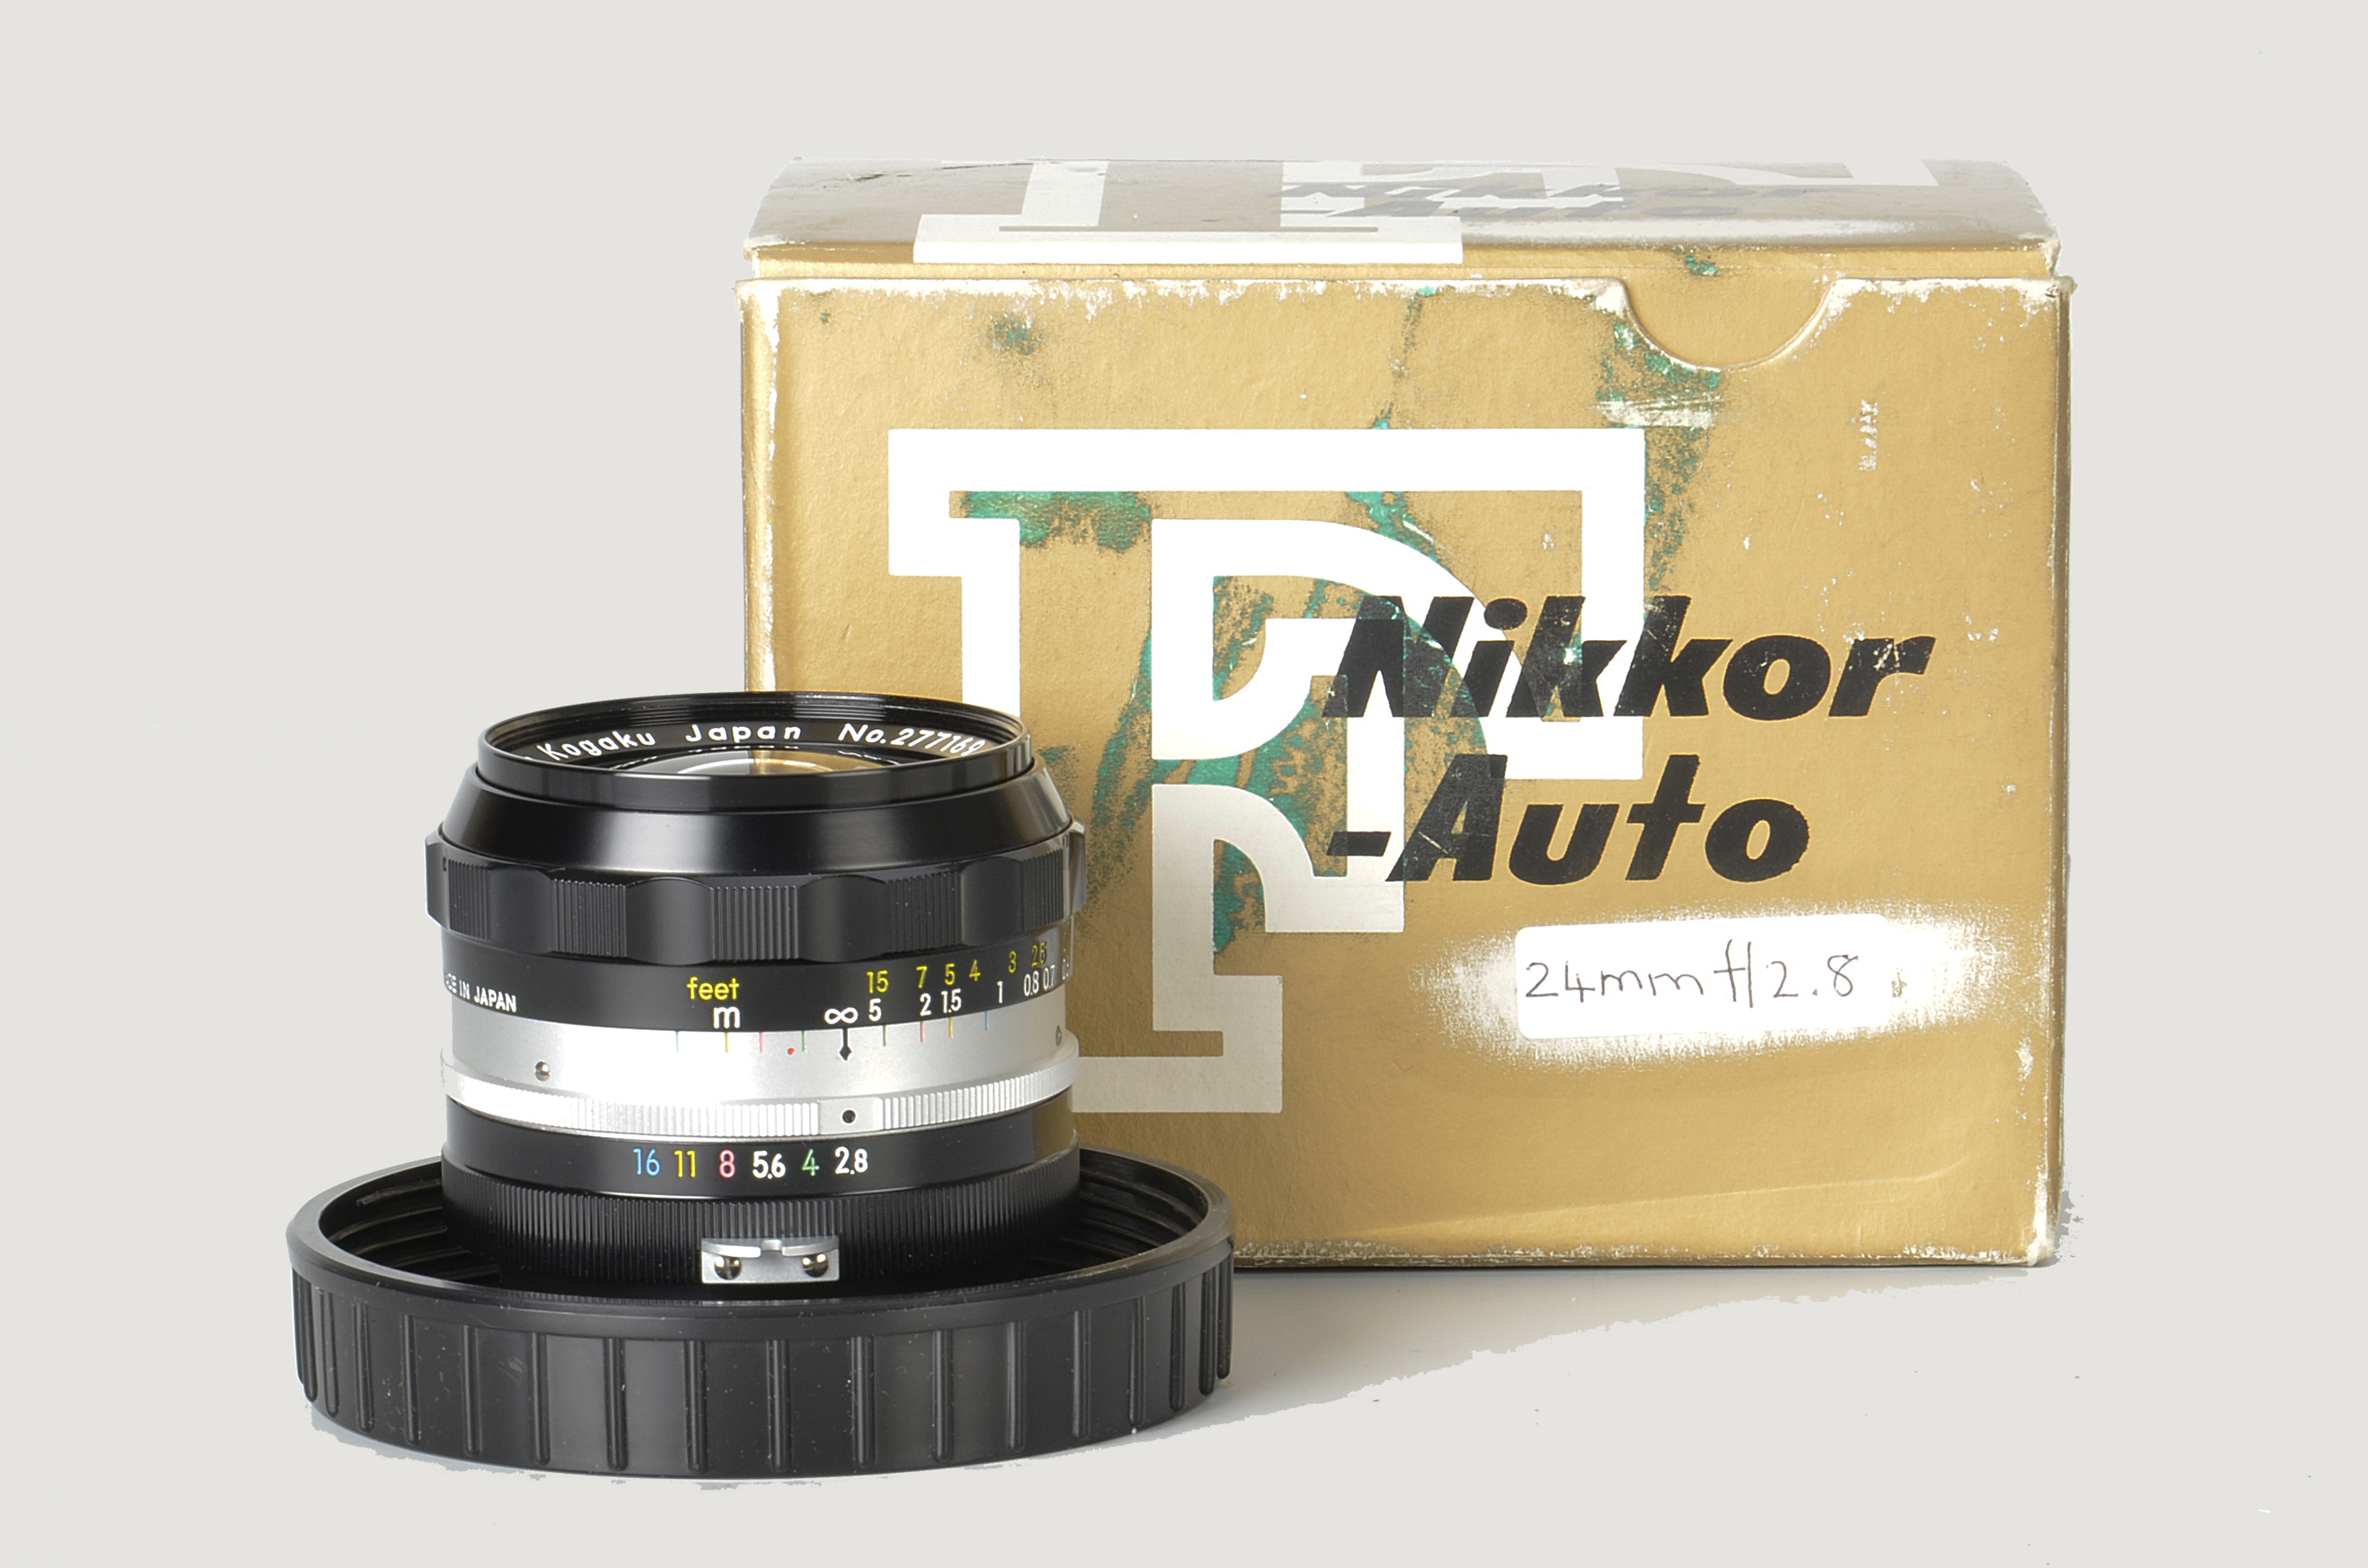 A Nikon Nikkor-N f/2.8 24mm Lens, black, serial no. 277169, body, E, elements, VG-E, in maker’s